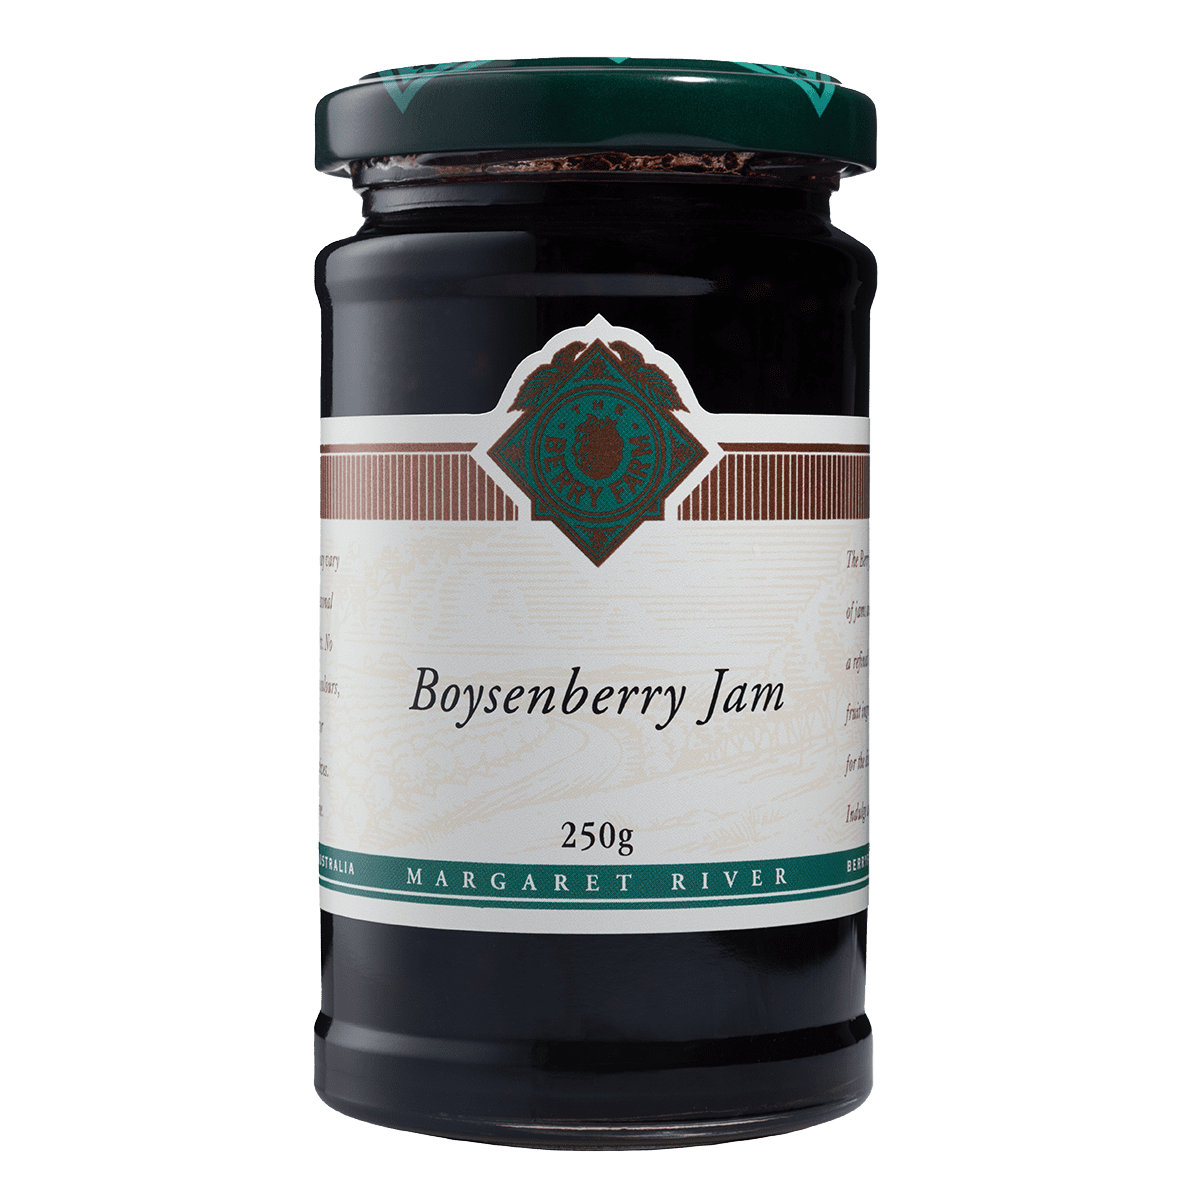 A jar of Boysenberry Jam